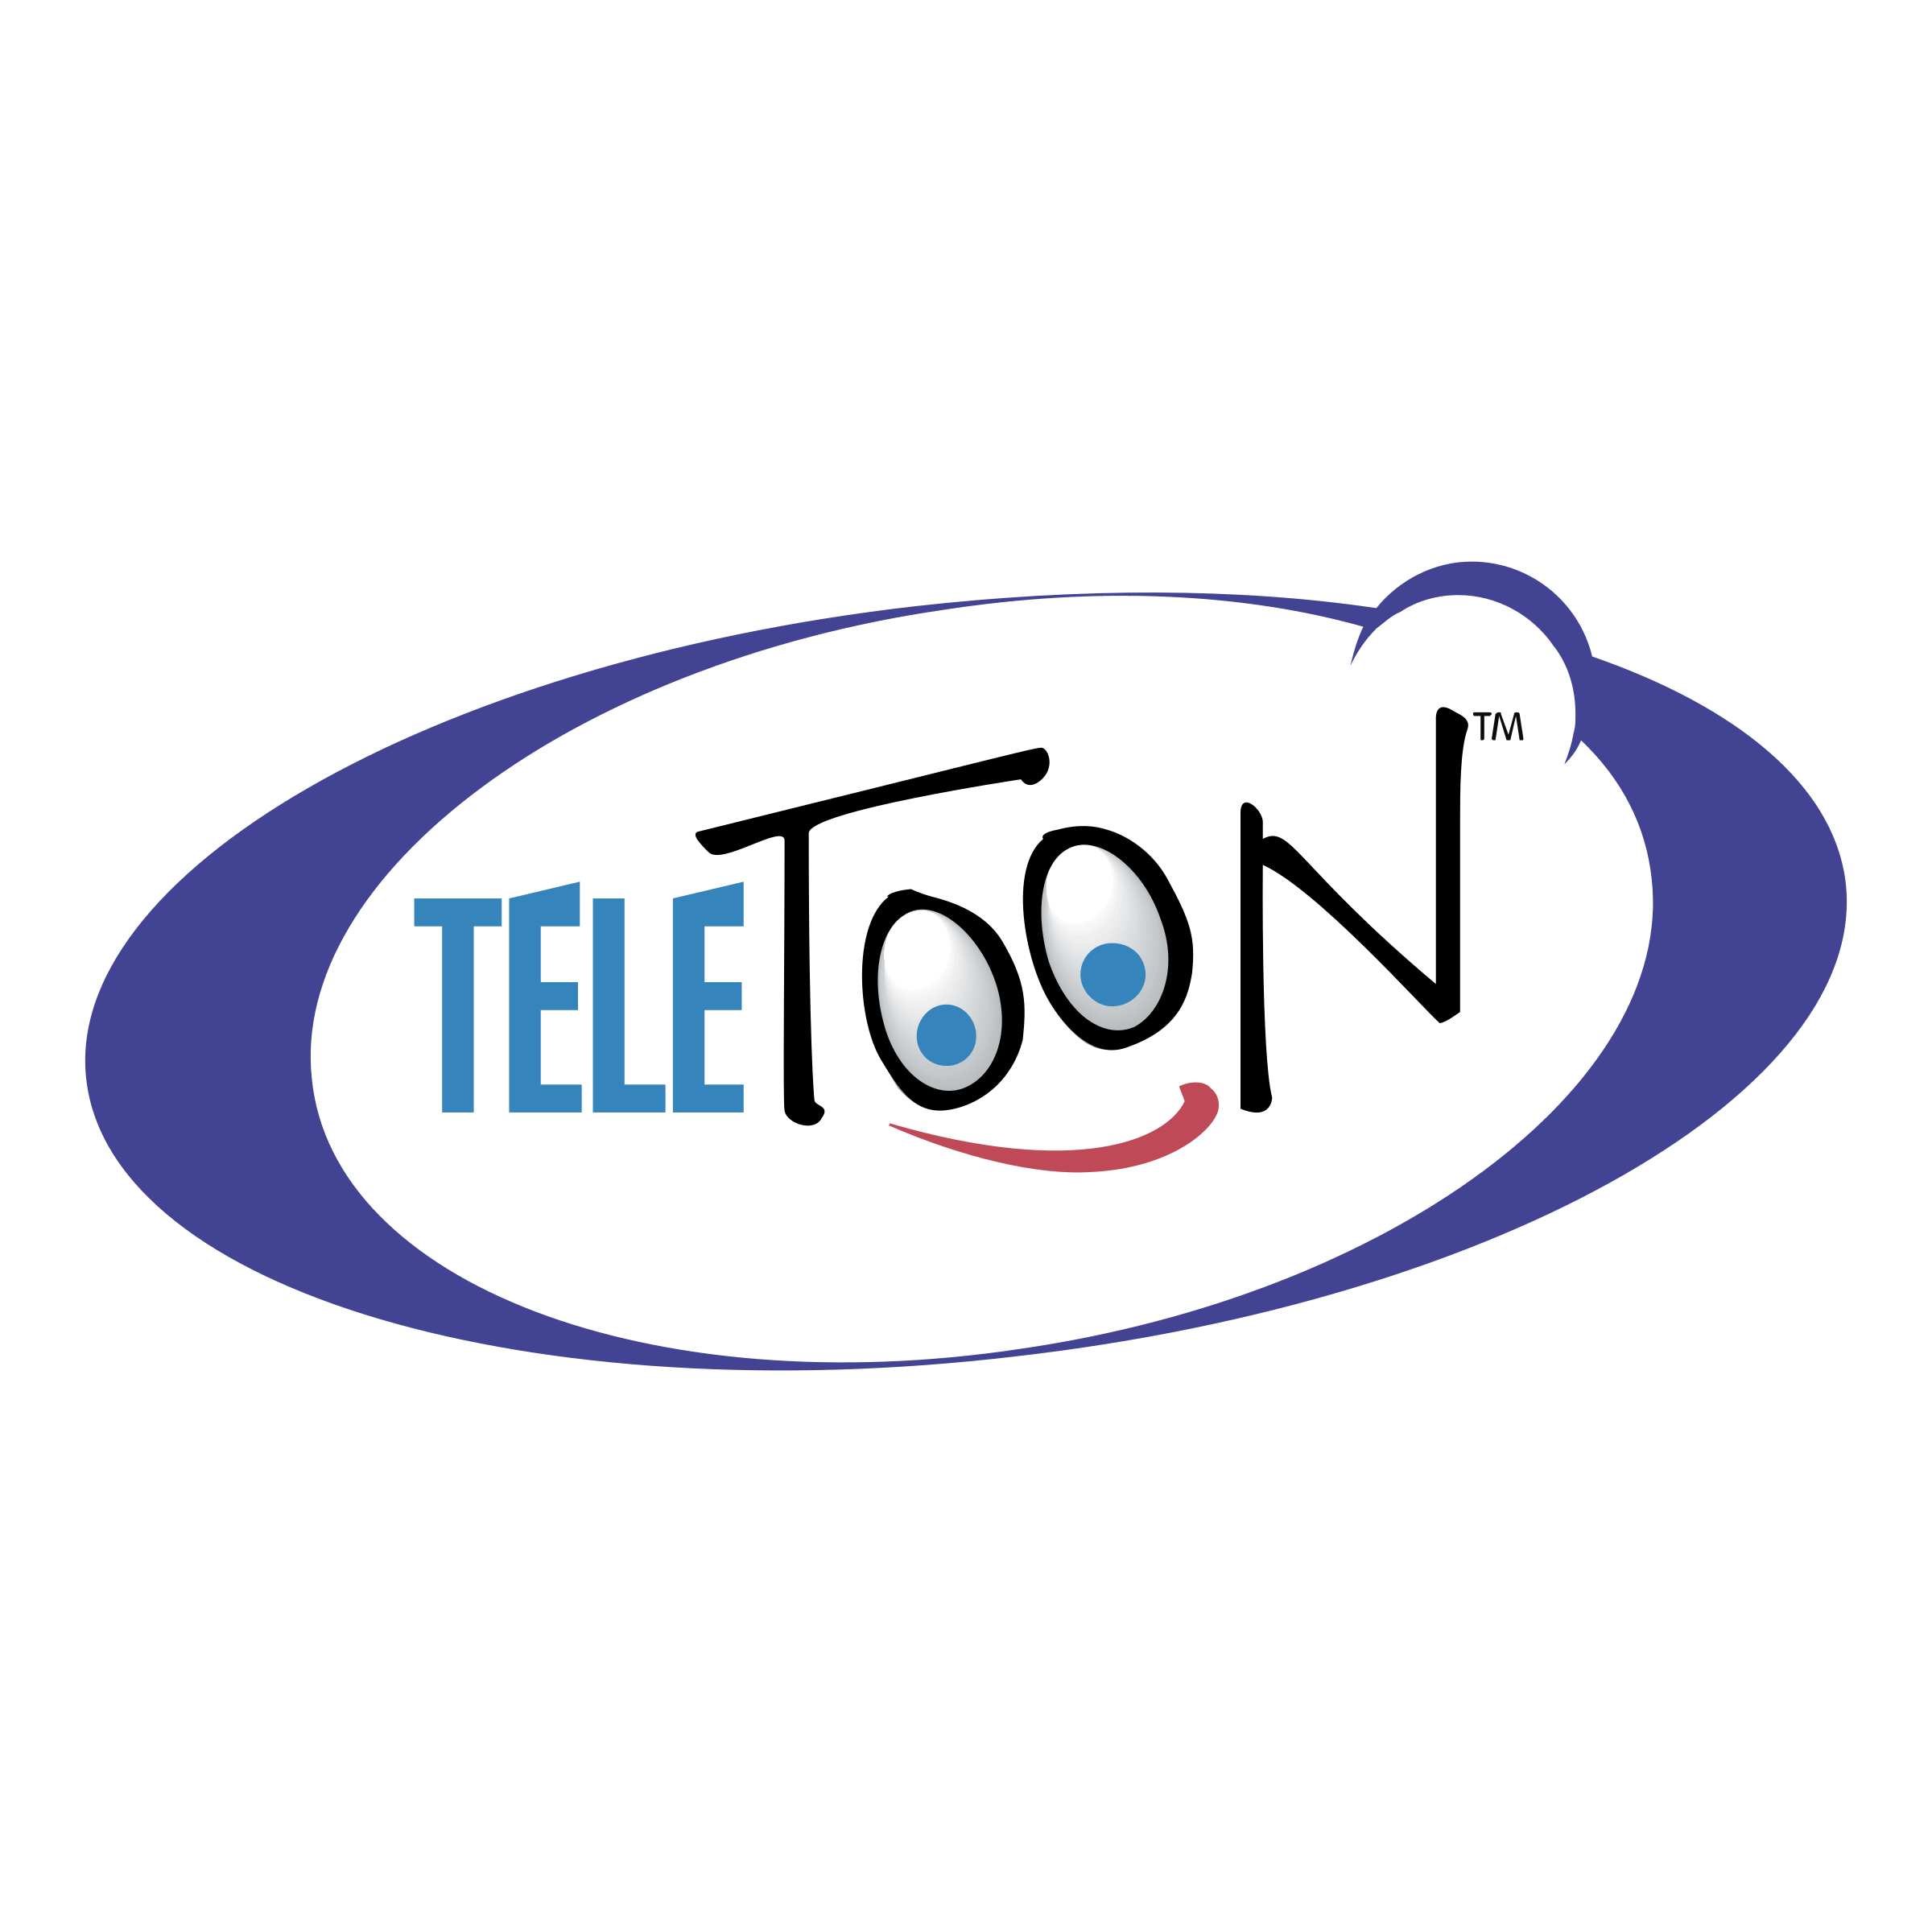 Teletoon Logo - Teletoon Logo PNG Transparent & SVG Vector